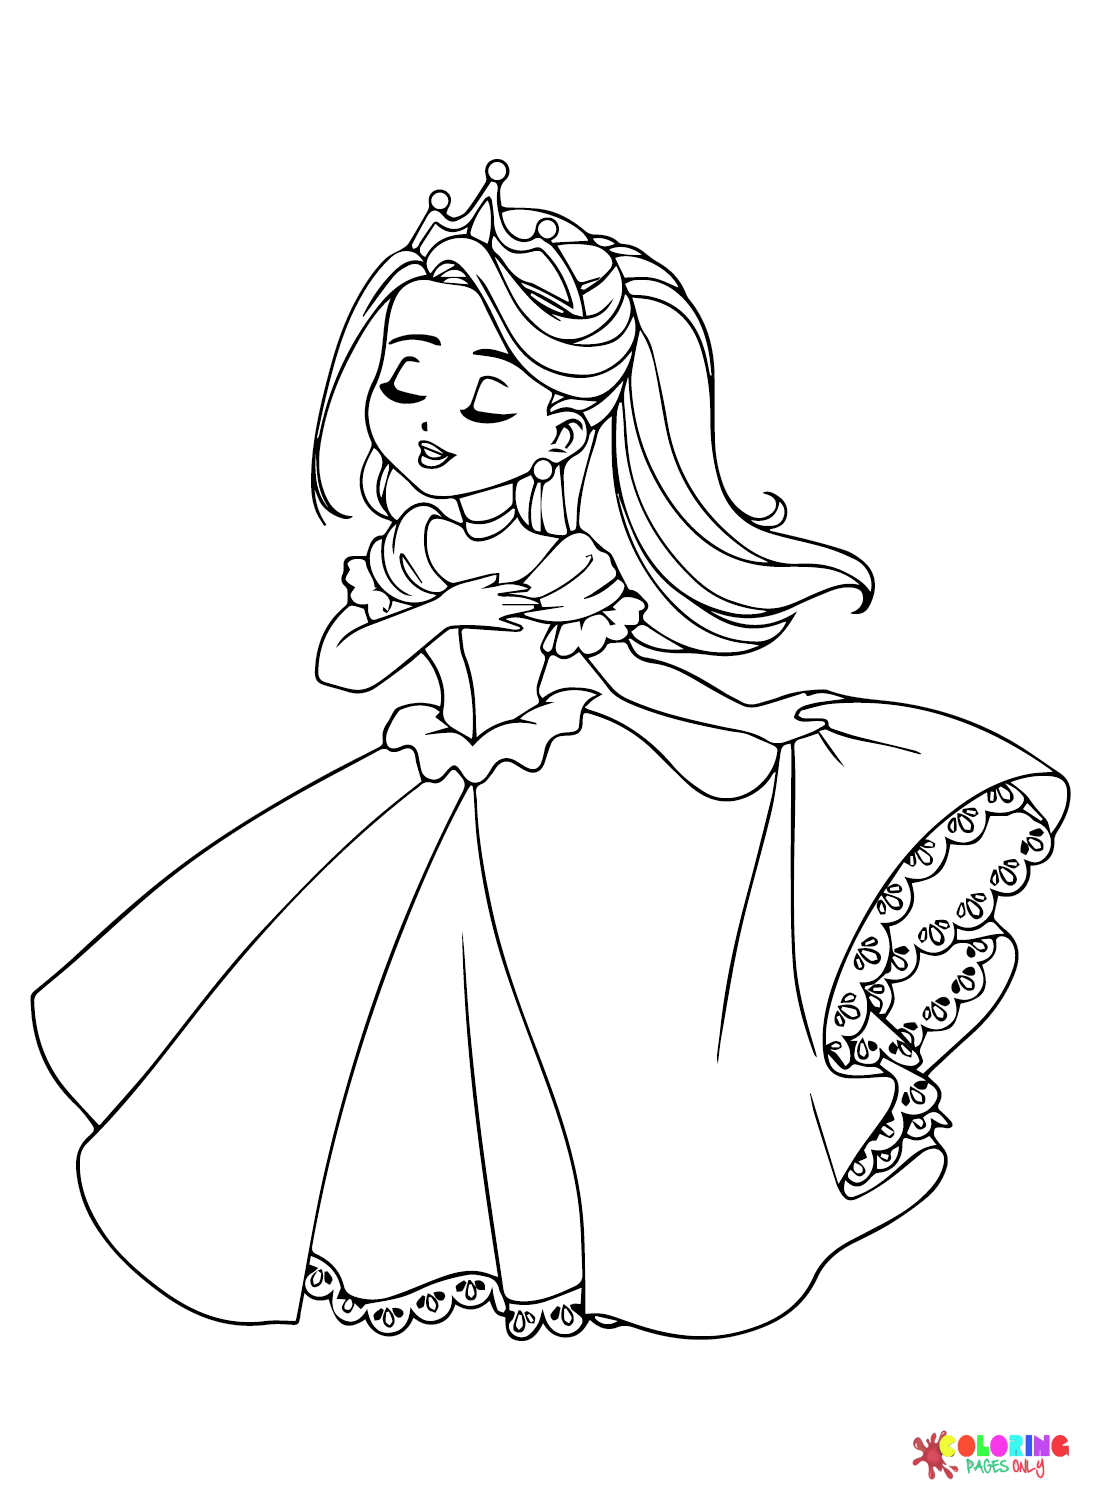 Gentle Queen Coloring Page